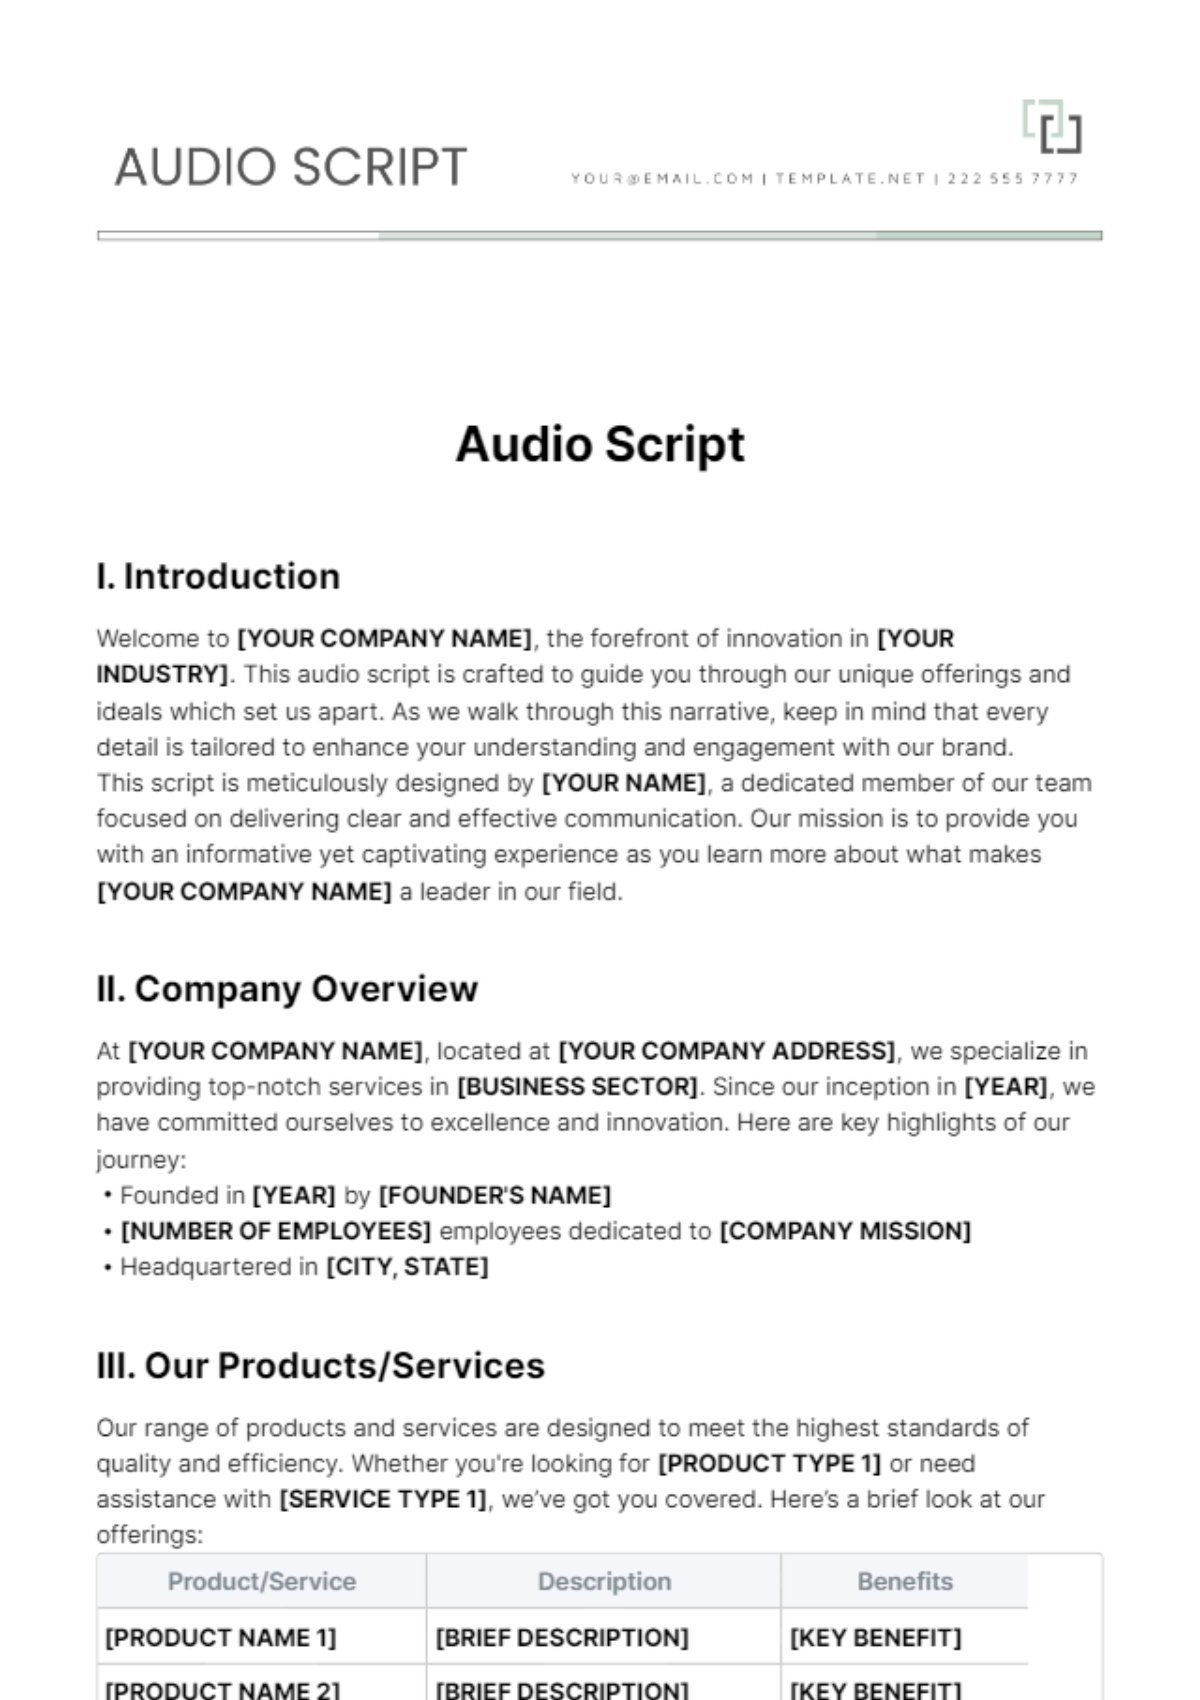 Audio Script Template